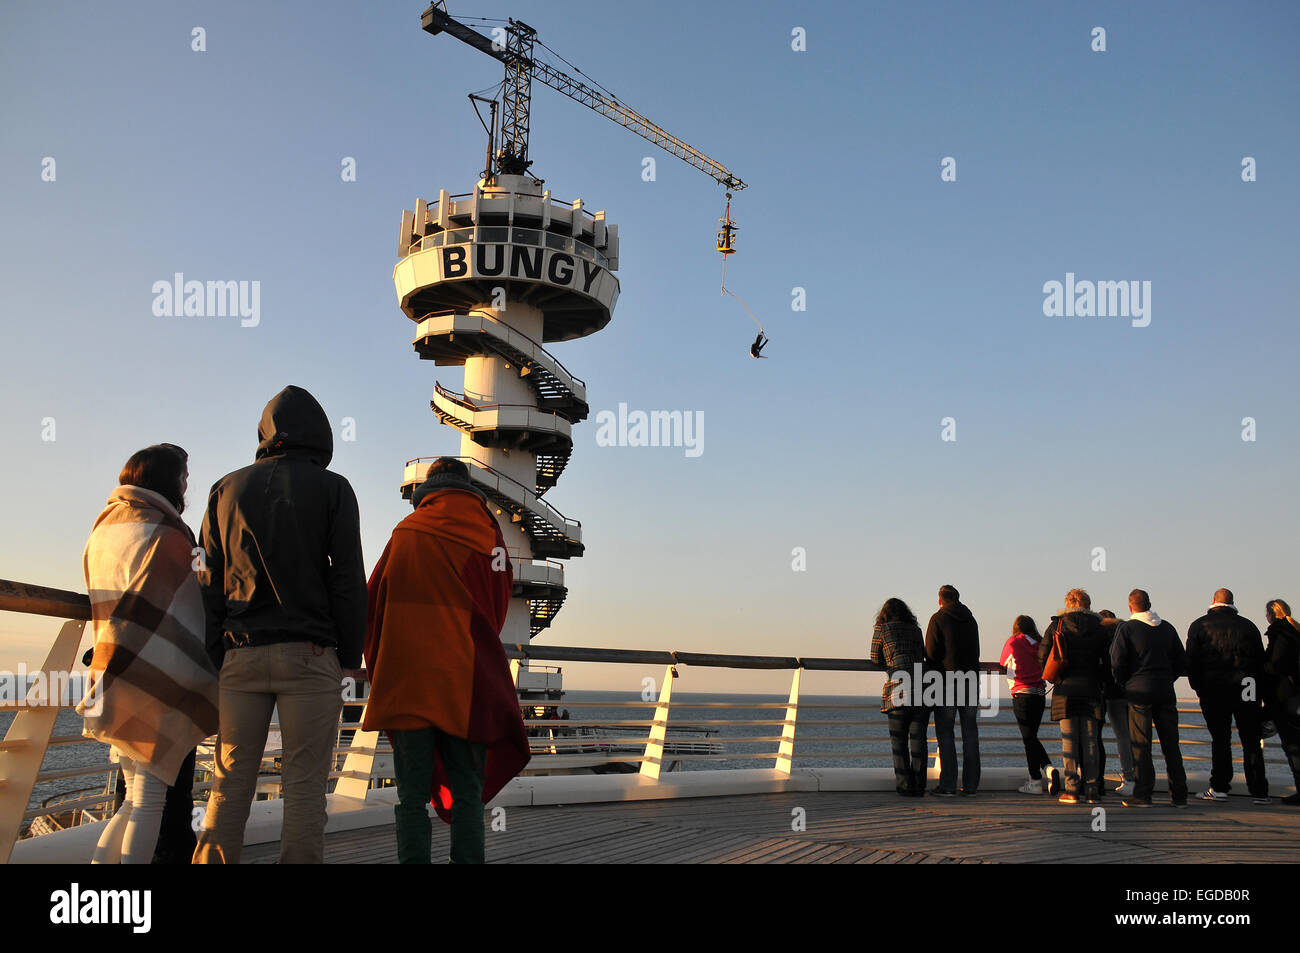 Bungee jumping on Casino Pier, Scheveningen on the North sea coast, Den Haag, The Netherlands Stock Photo